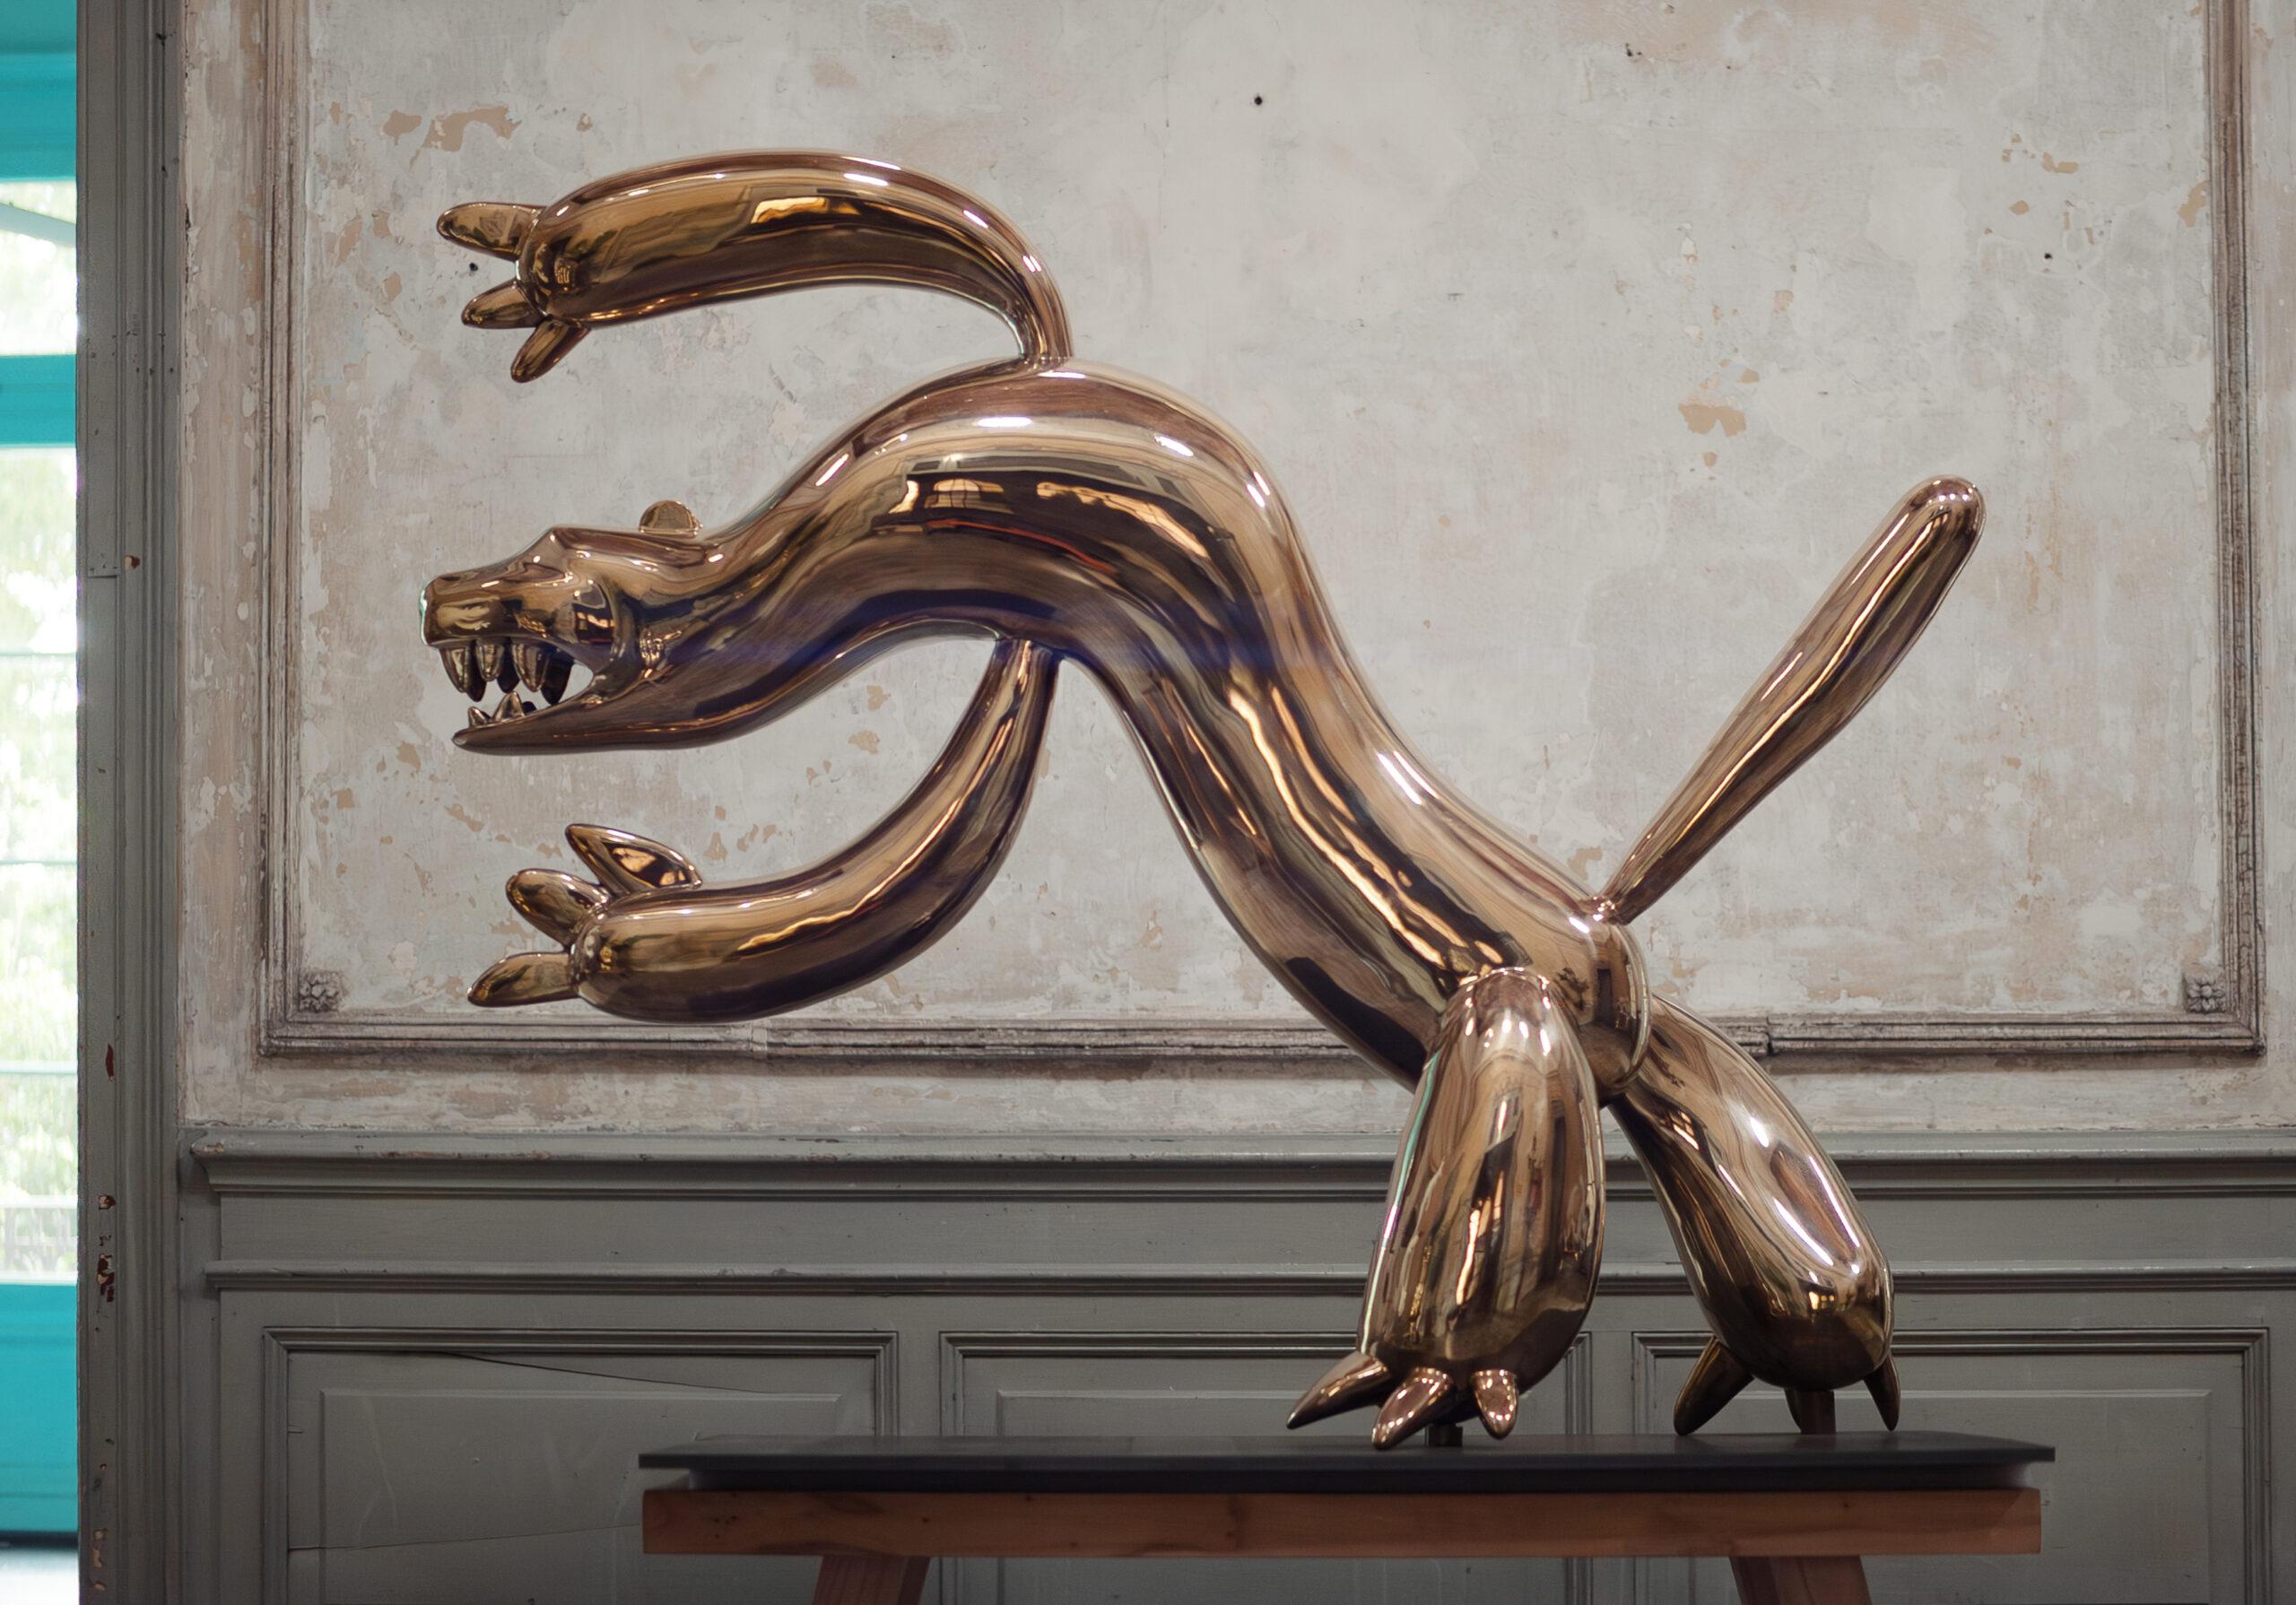 Tiger by Marcelo Martin Burgos - Polished bronze sculpture, golden, wild cat For Sale 7